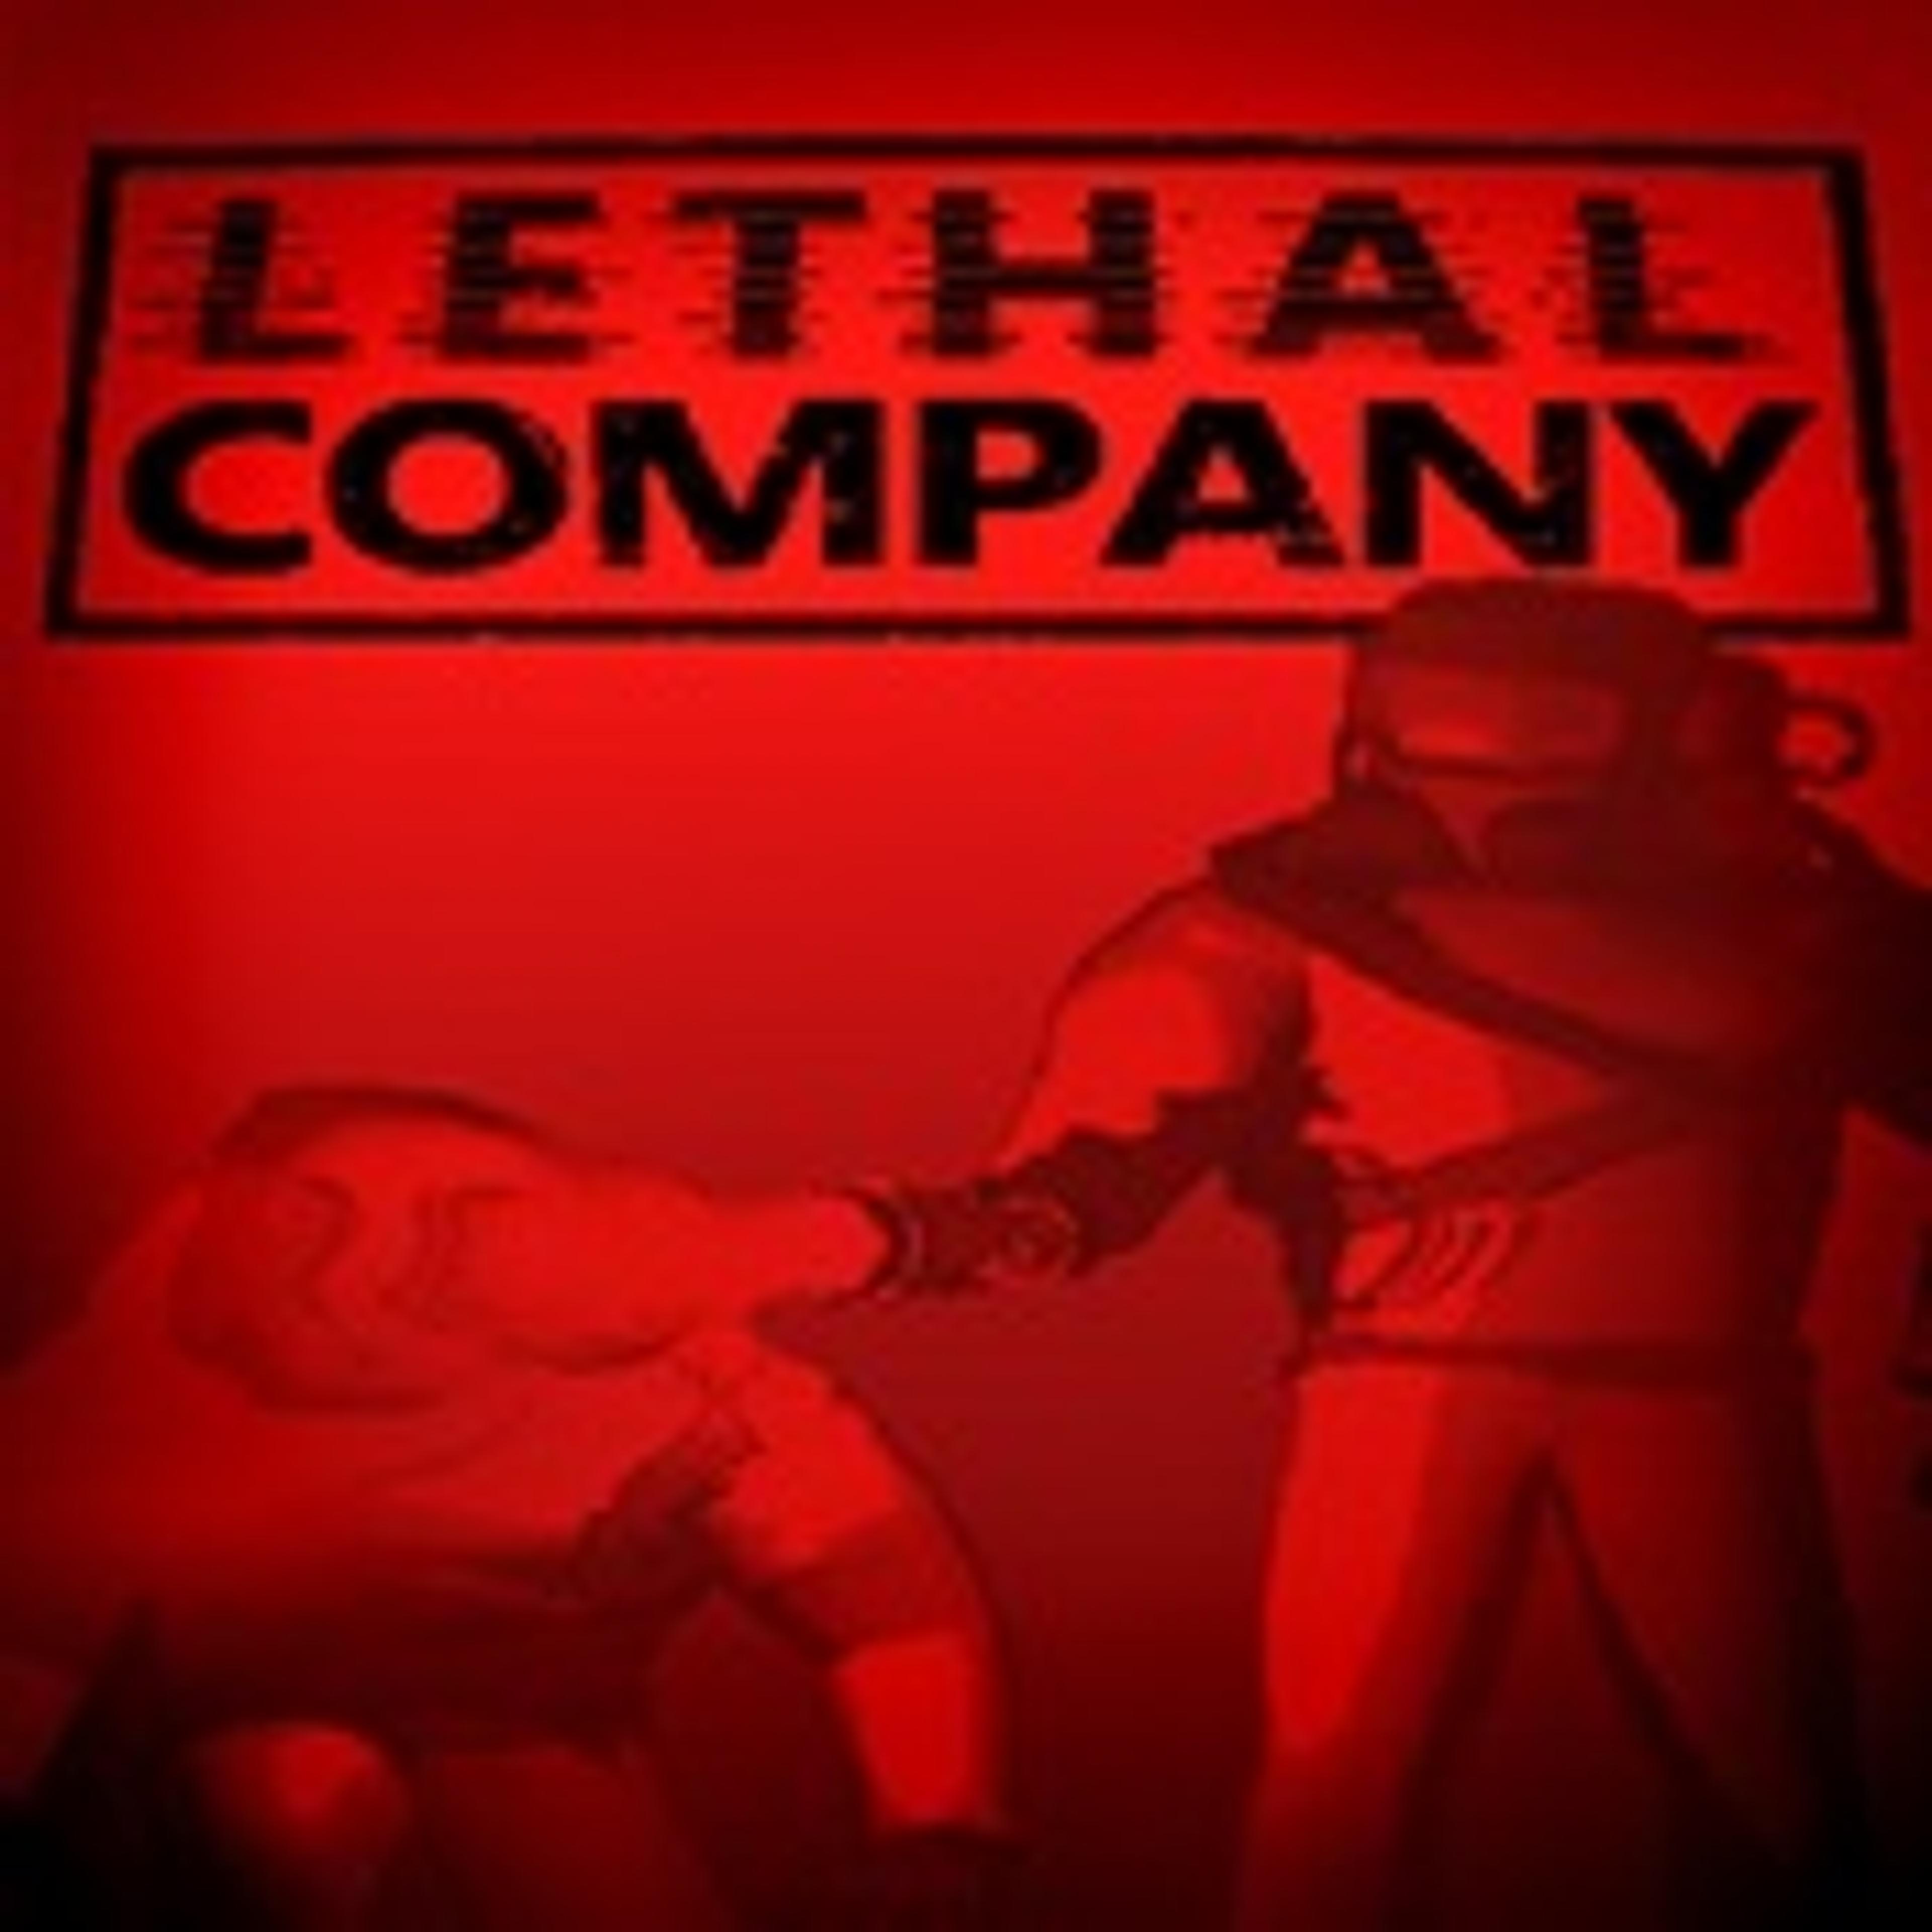 Lethal Company via Steam Wallet Code